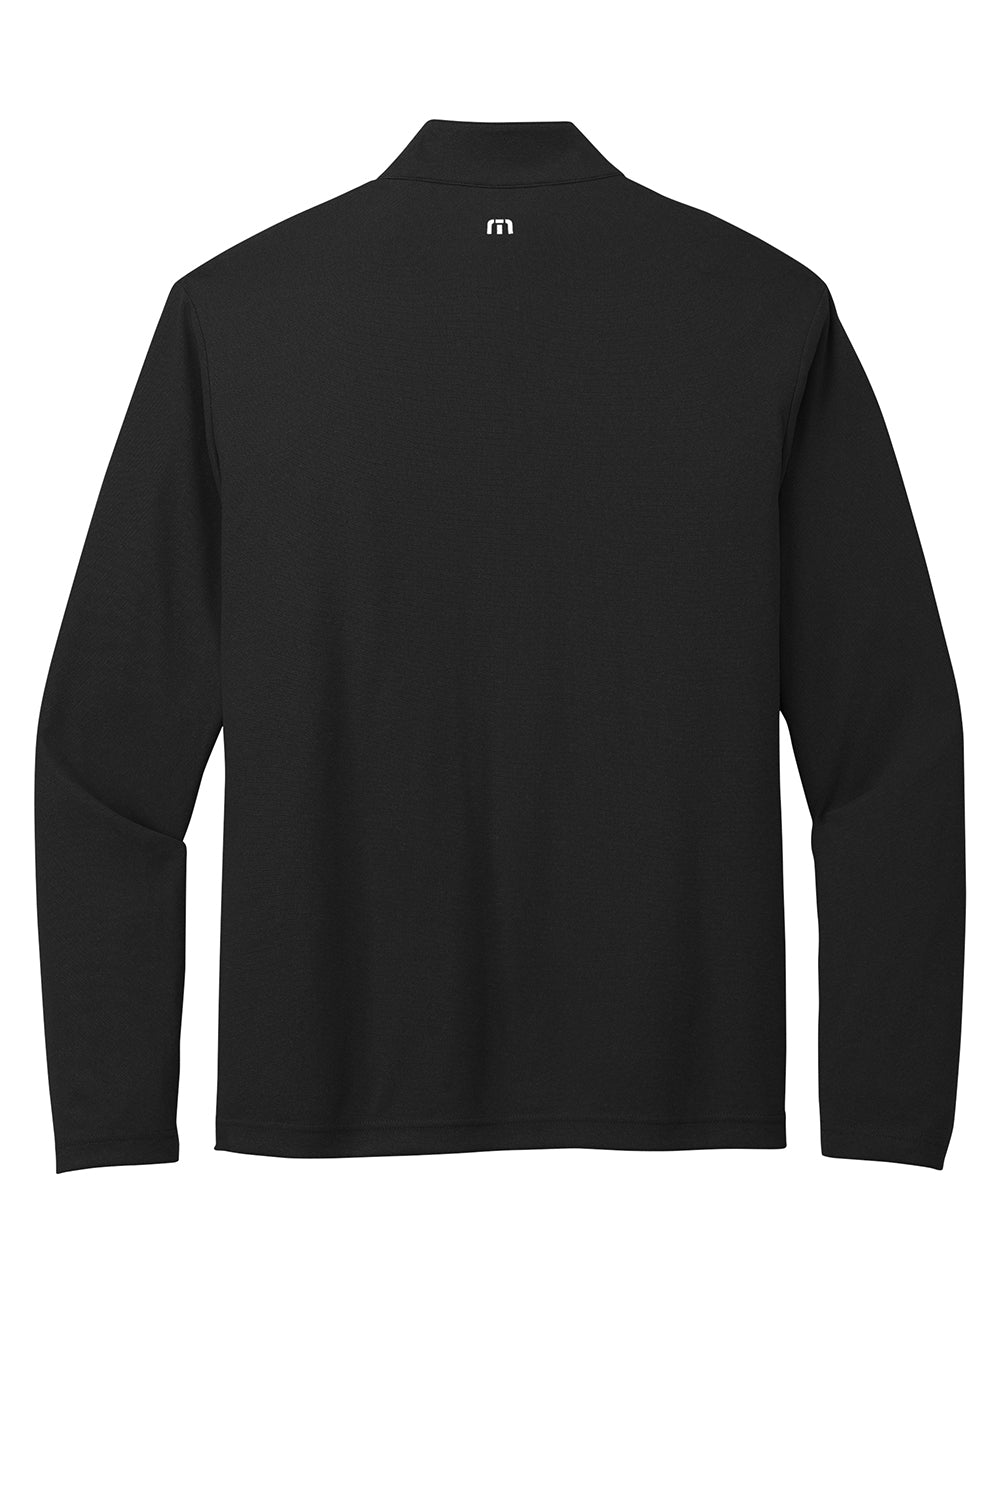 TravisMathew TM1MY397 Mens Coto Performance Wrinkle Resistant 1/4 Zip Sweatshirt Black Flat Back